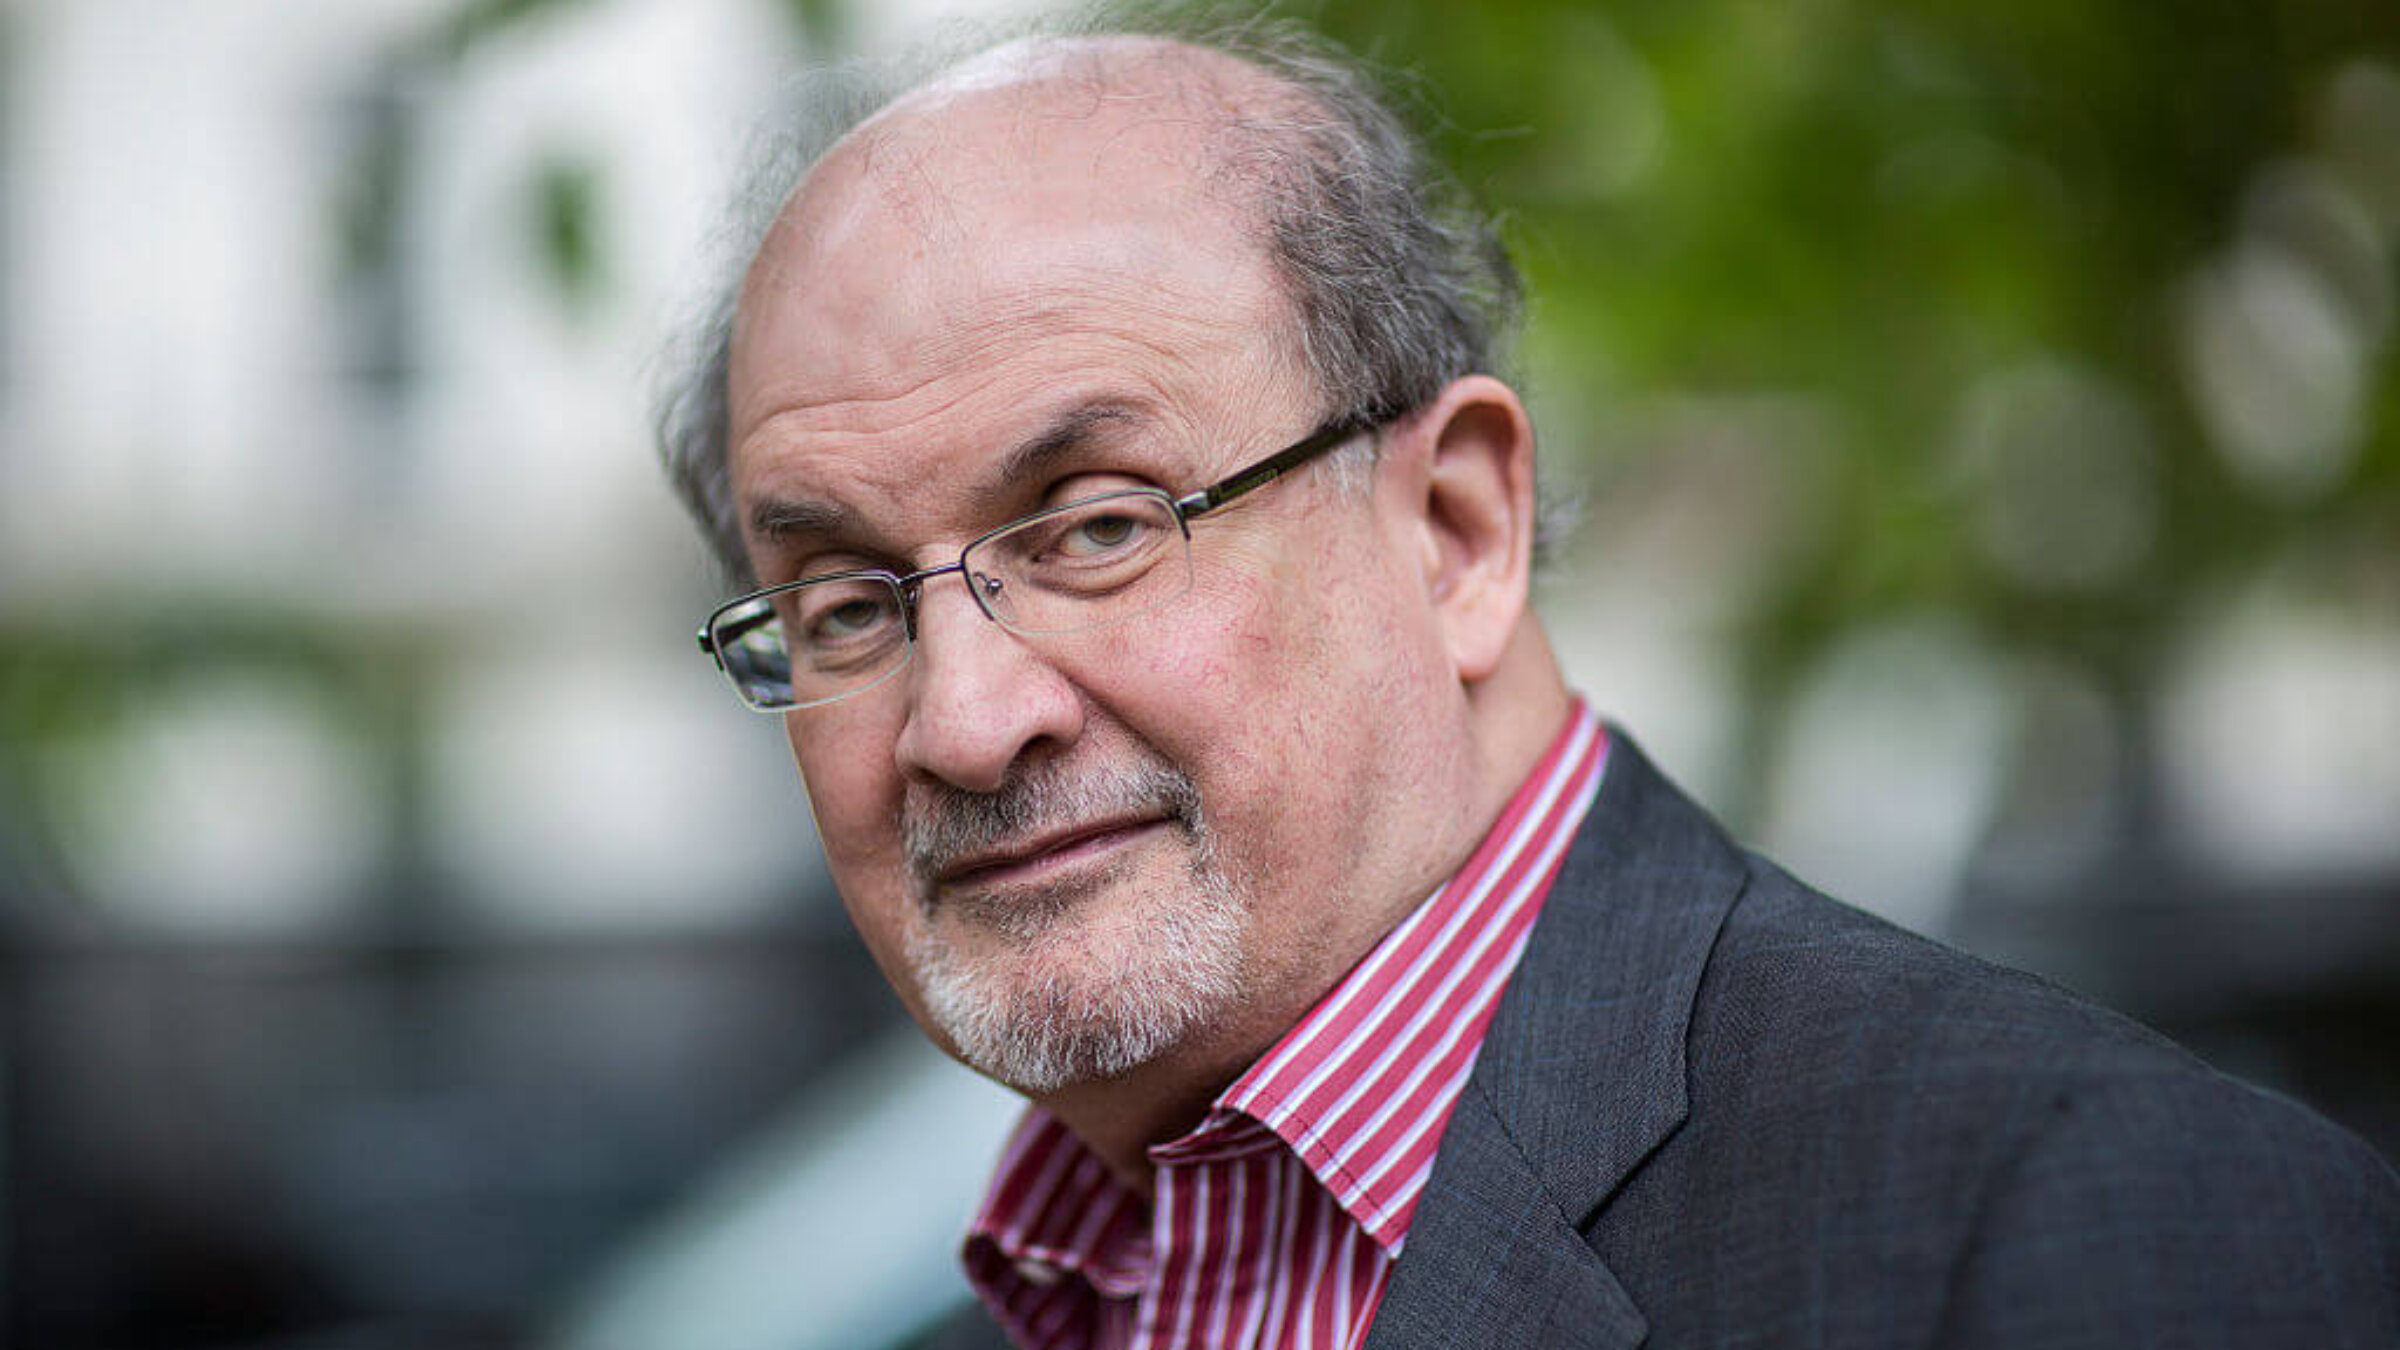 Salman Rushdie, writer, at the Cheltenham Literature Festival on October 10, 2015 in Cheltenham, England. 